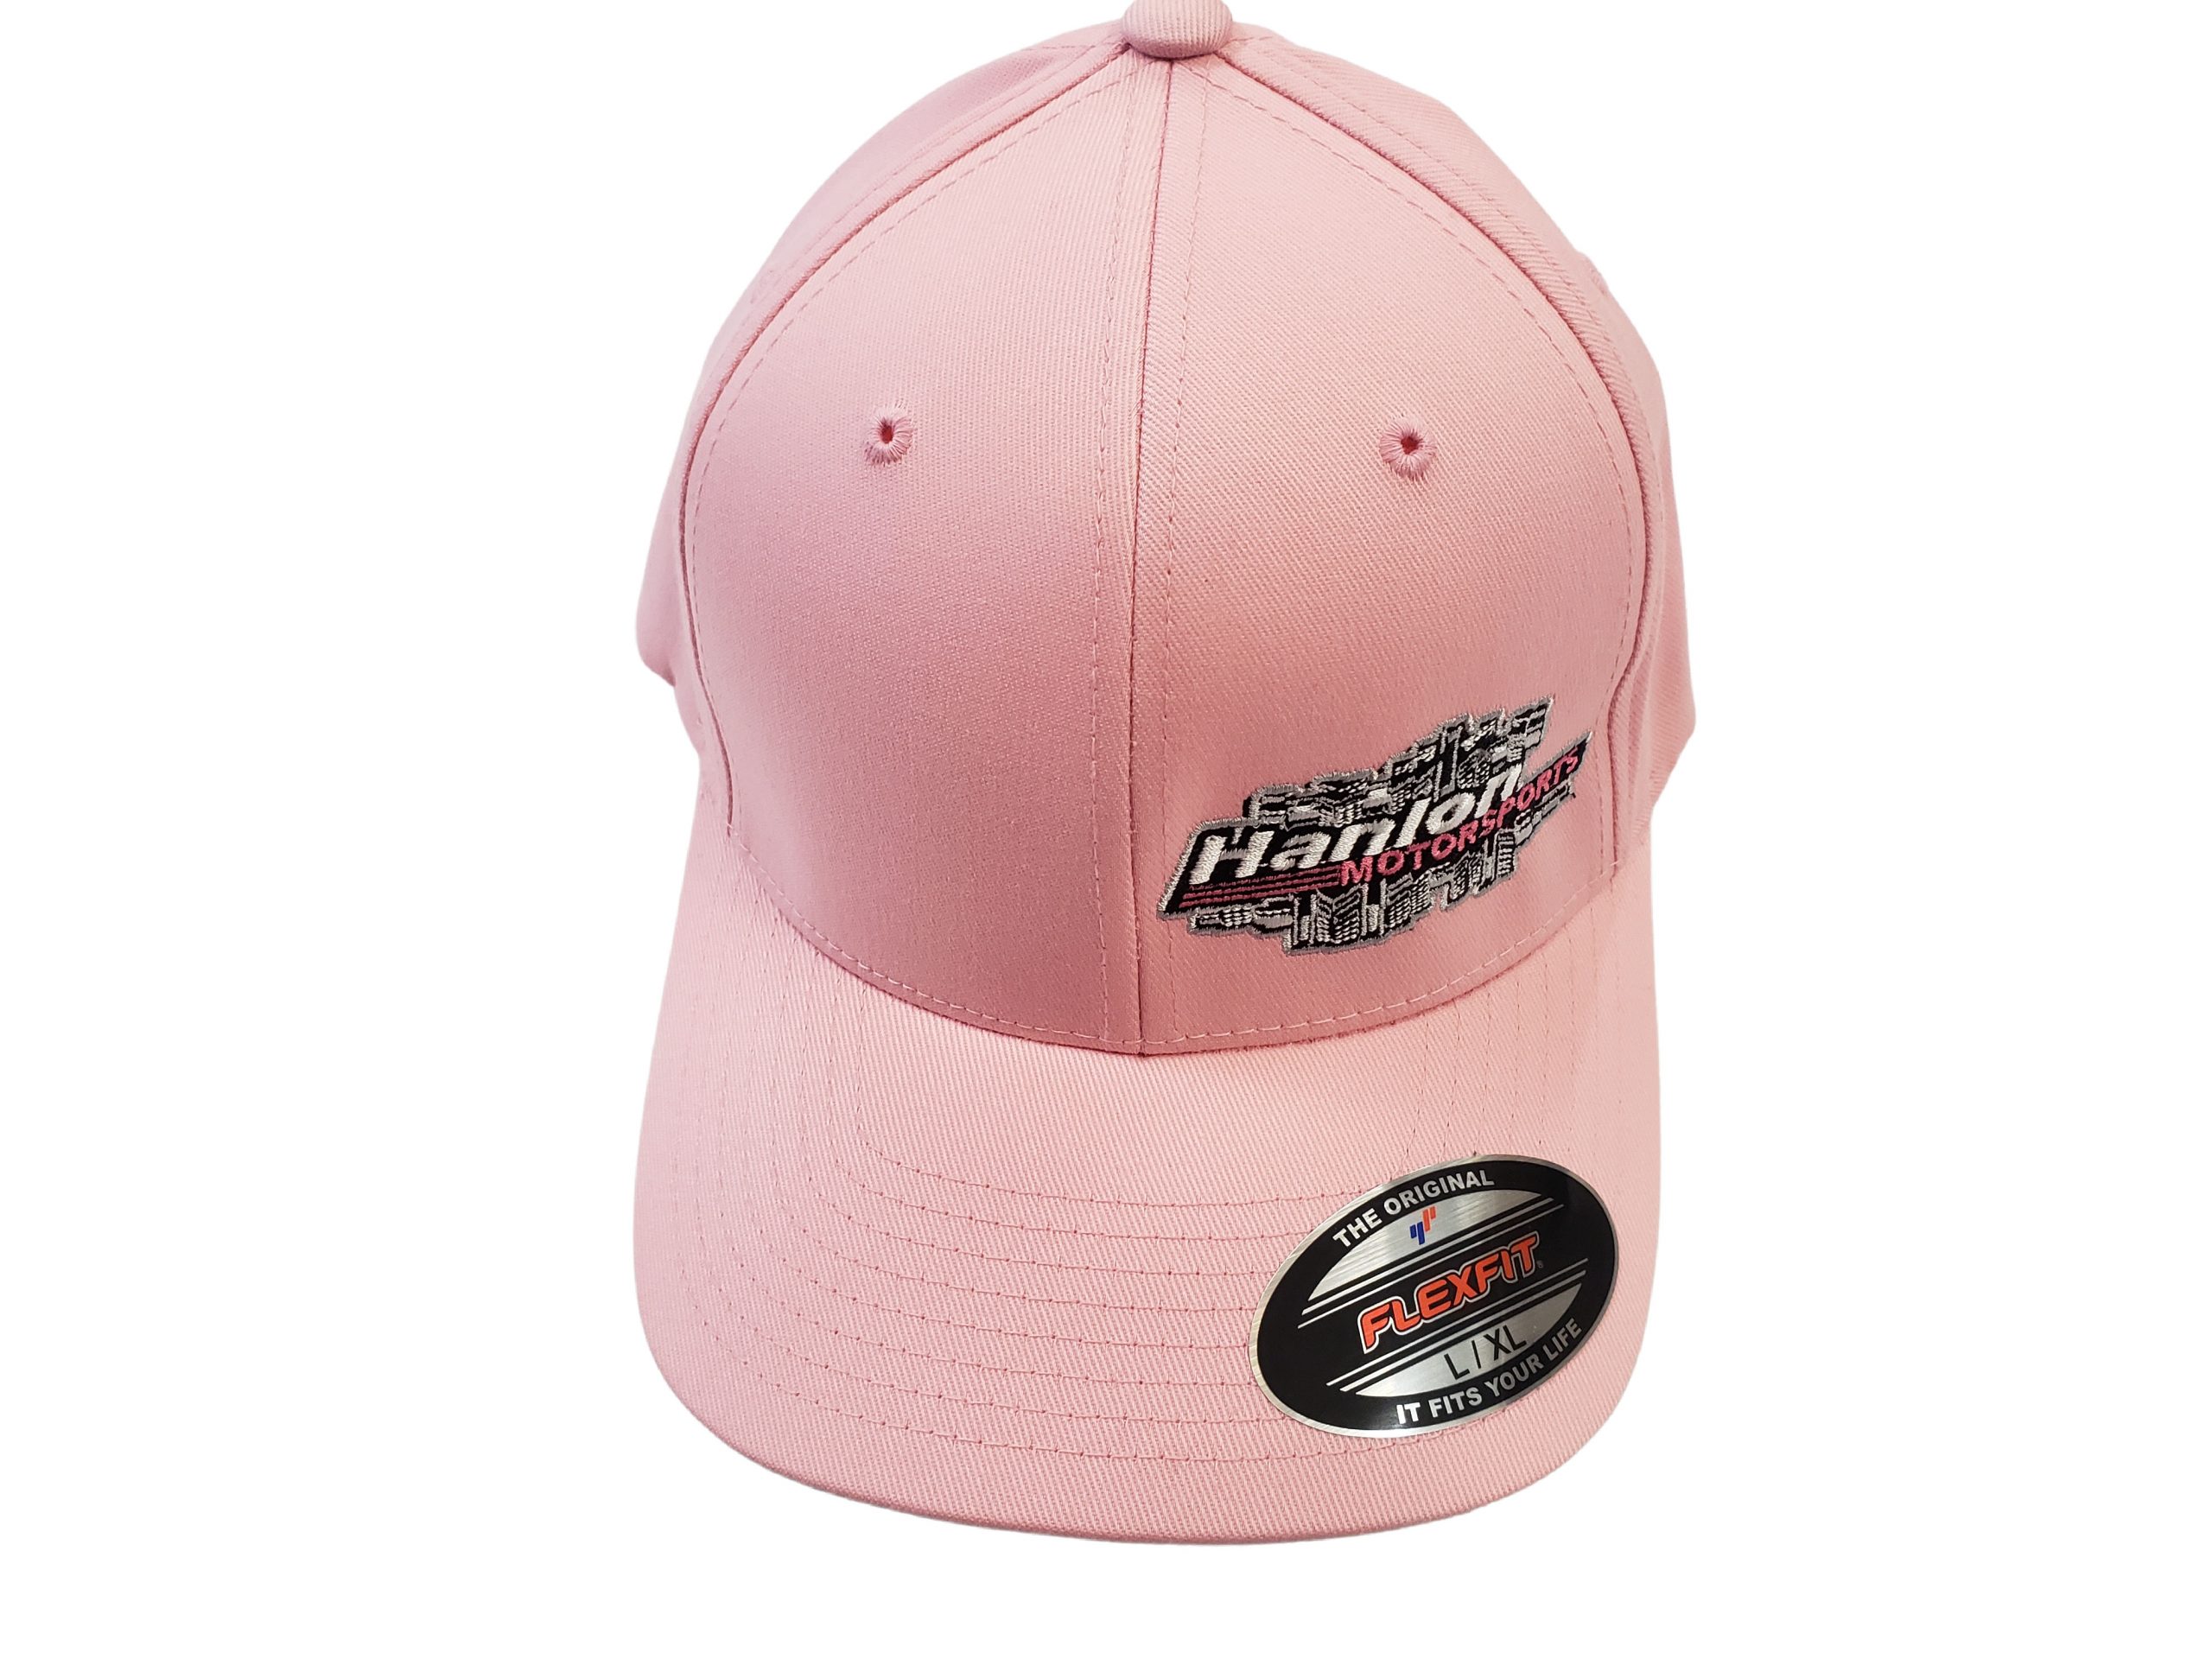 HMS FlexFit Hat - – Hanlon Motorsports Pink